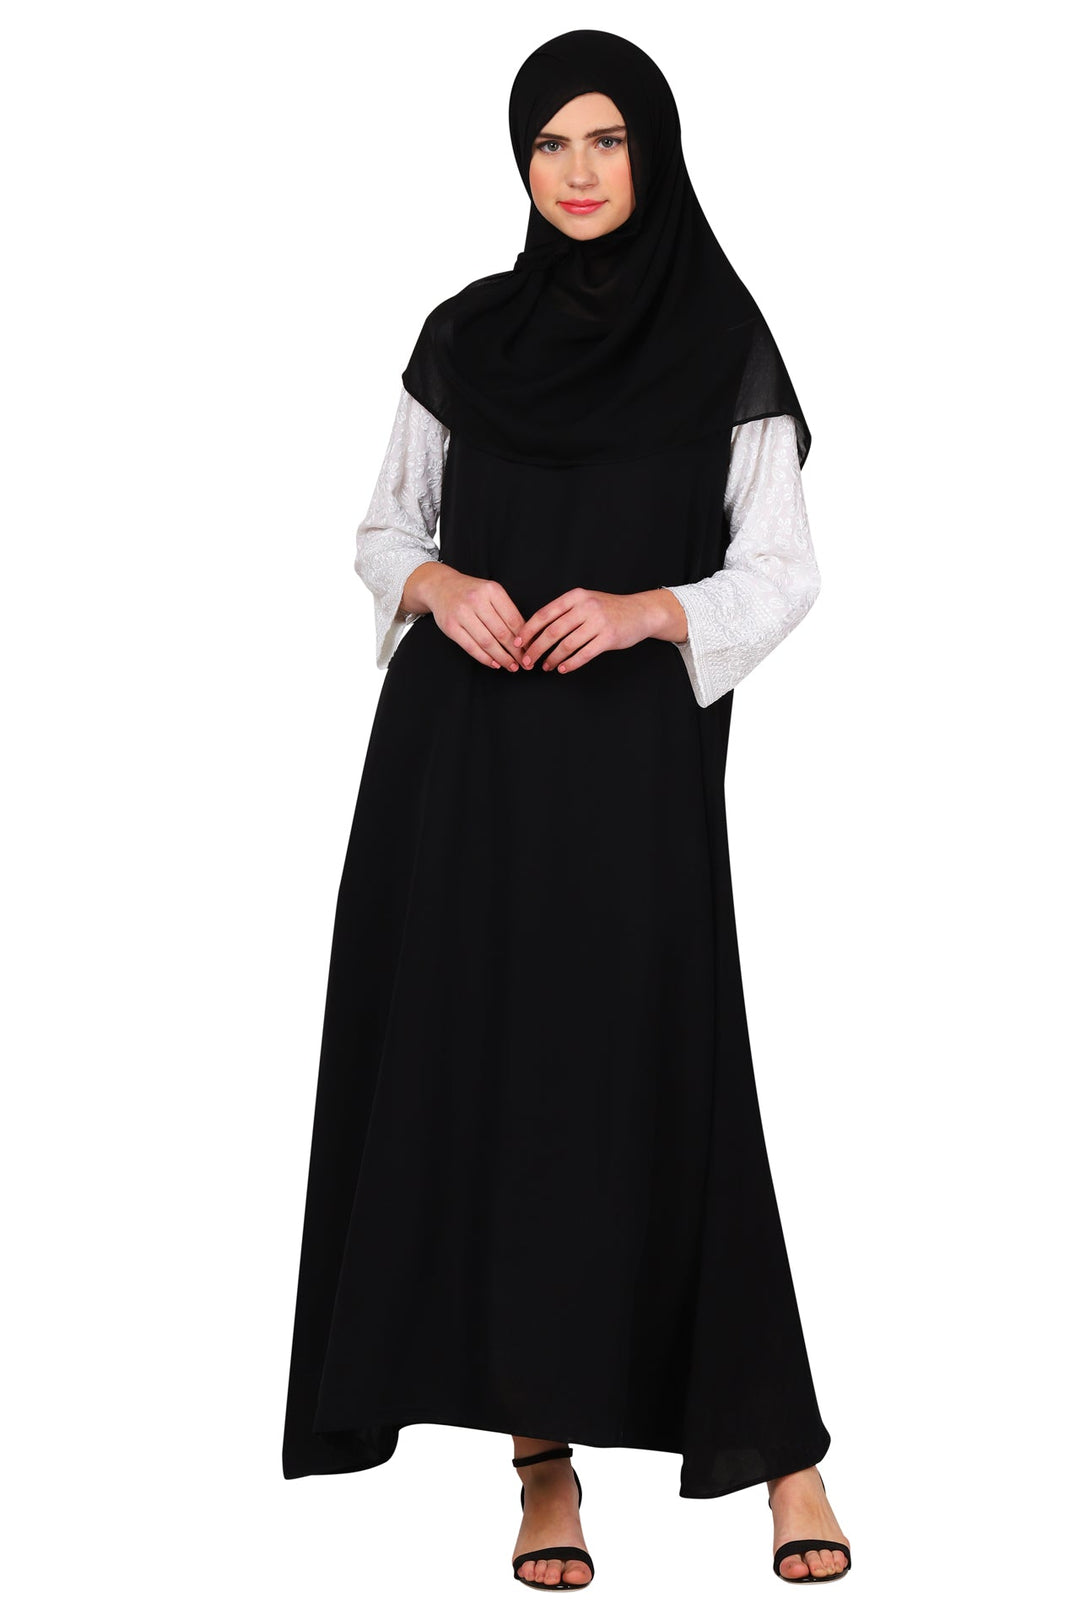 Black-Polyester-Royal-Stylized-Bottom-Minimalistic-Abaya